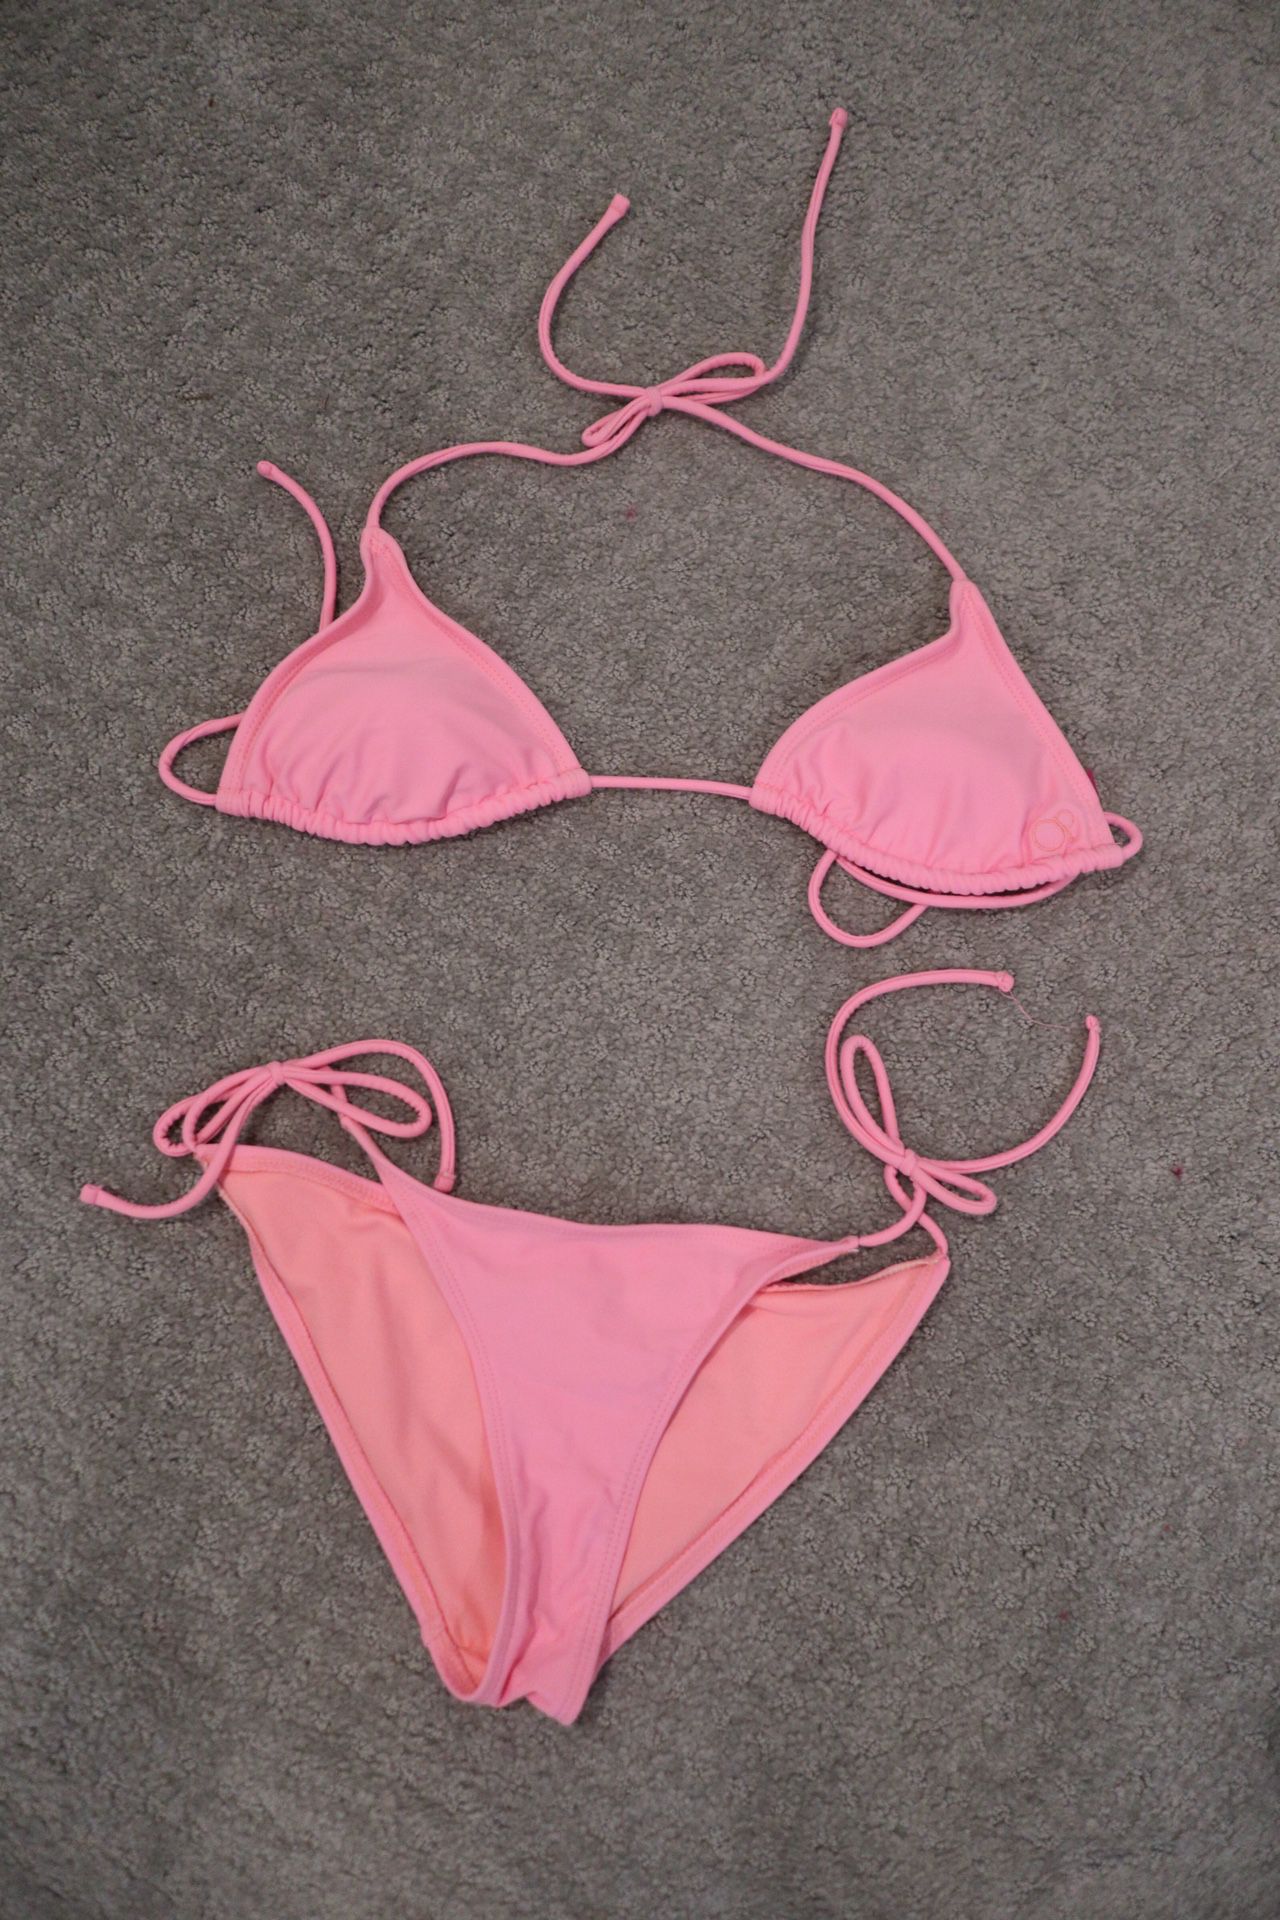 Pink bikini size S/M beach pool summer vacation holiday sun tan swimsuit